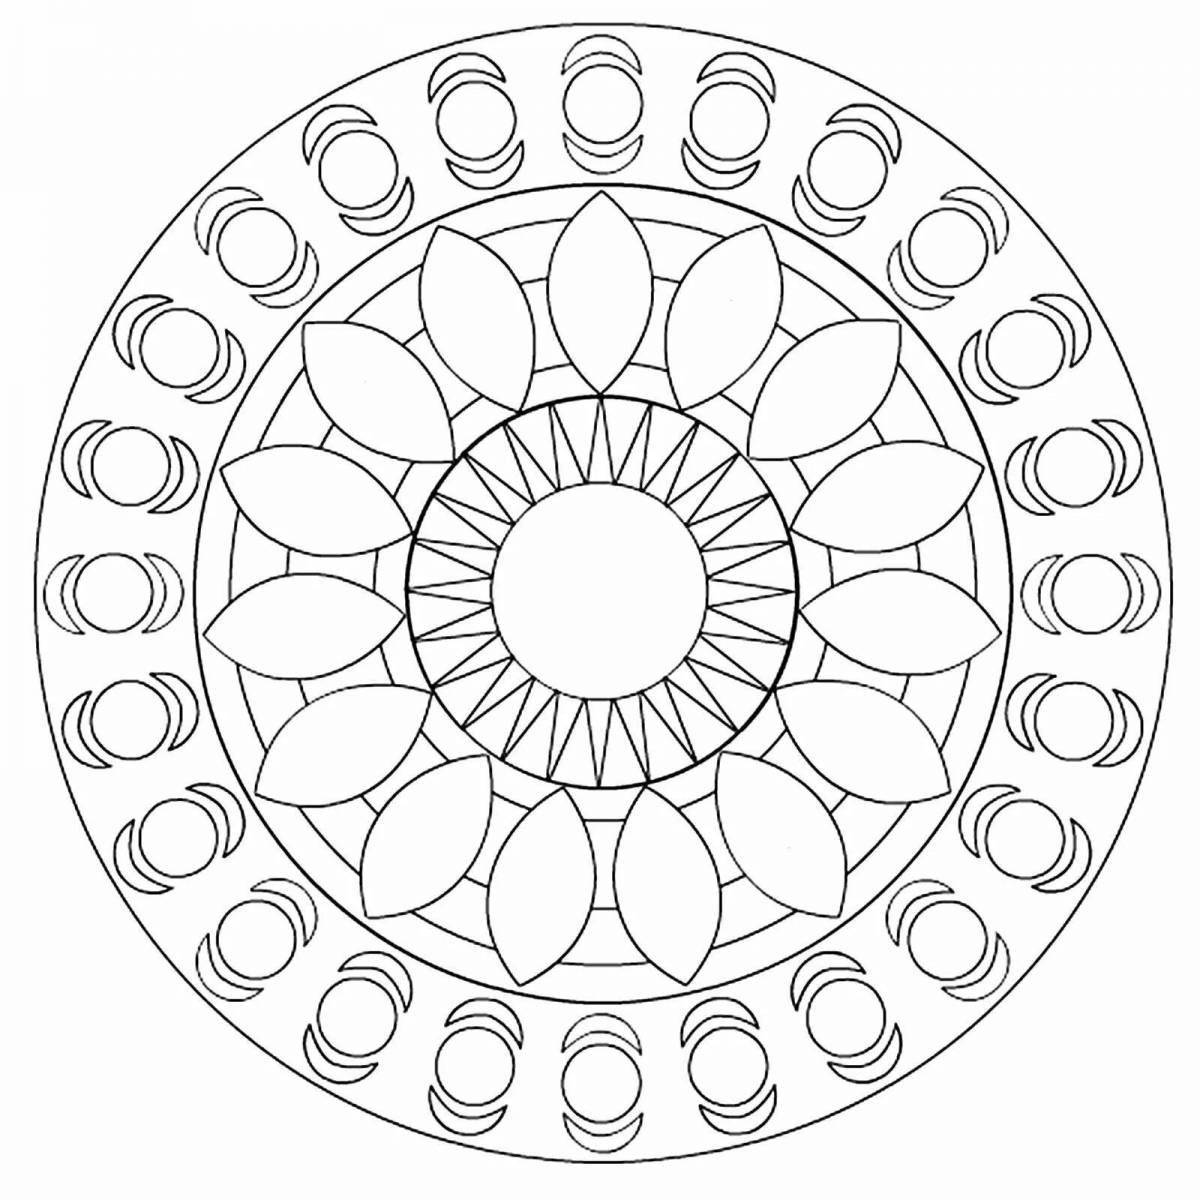 Coloring page gorgeous circular pattern